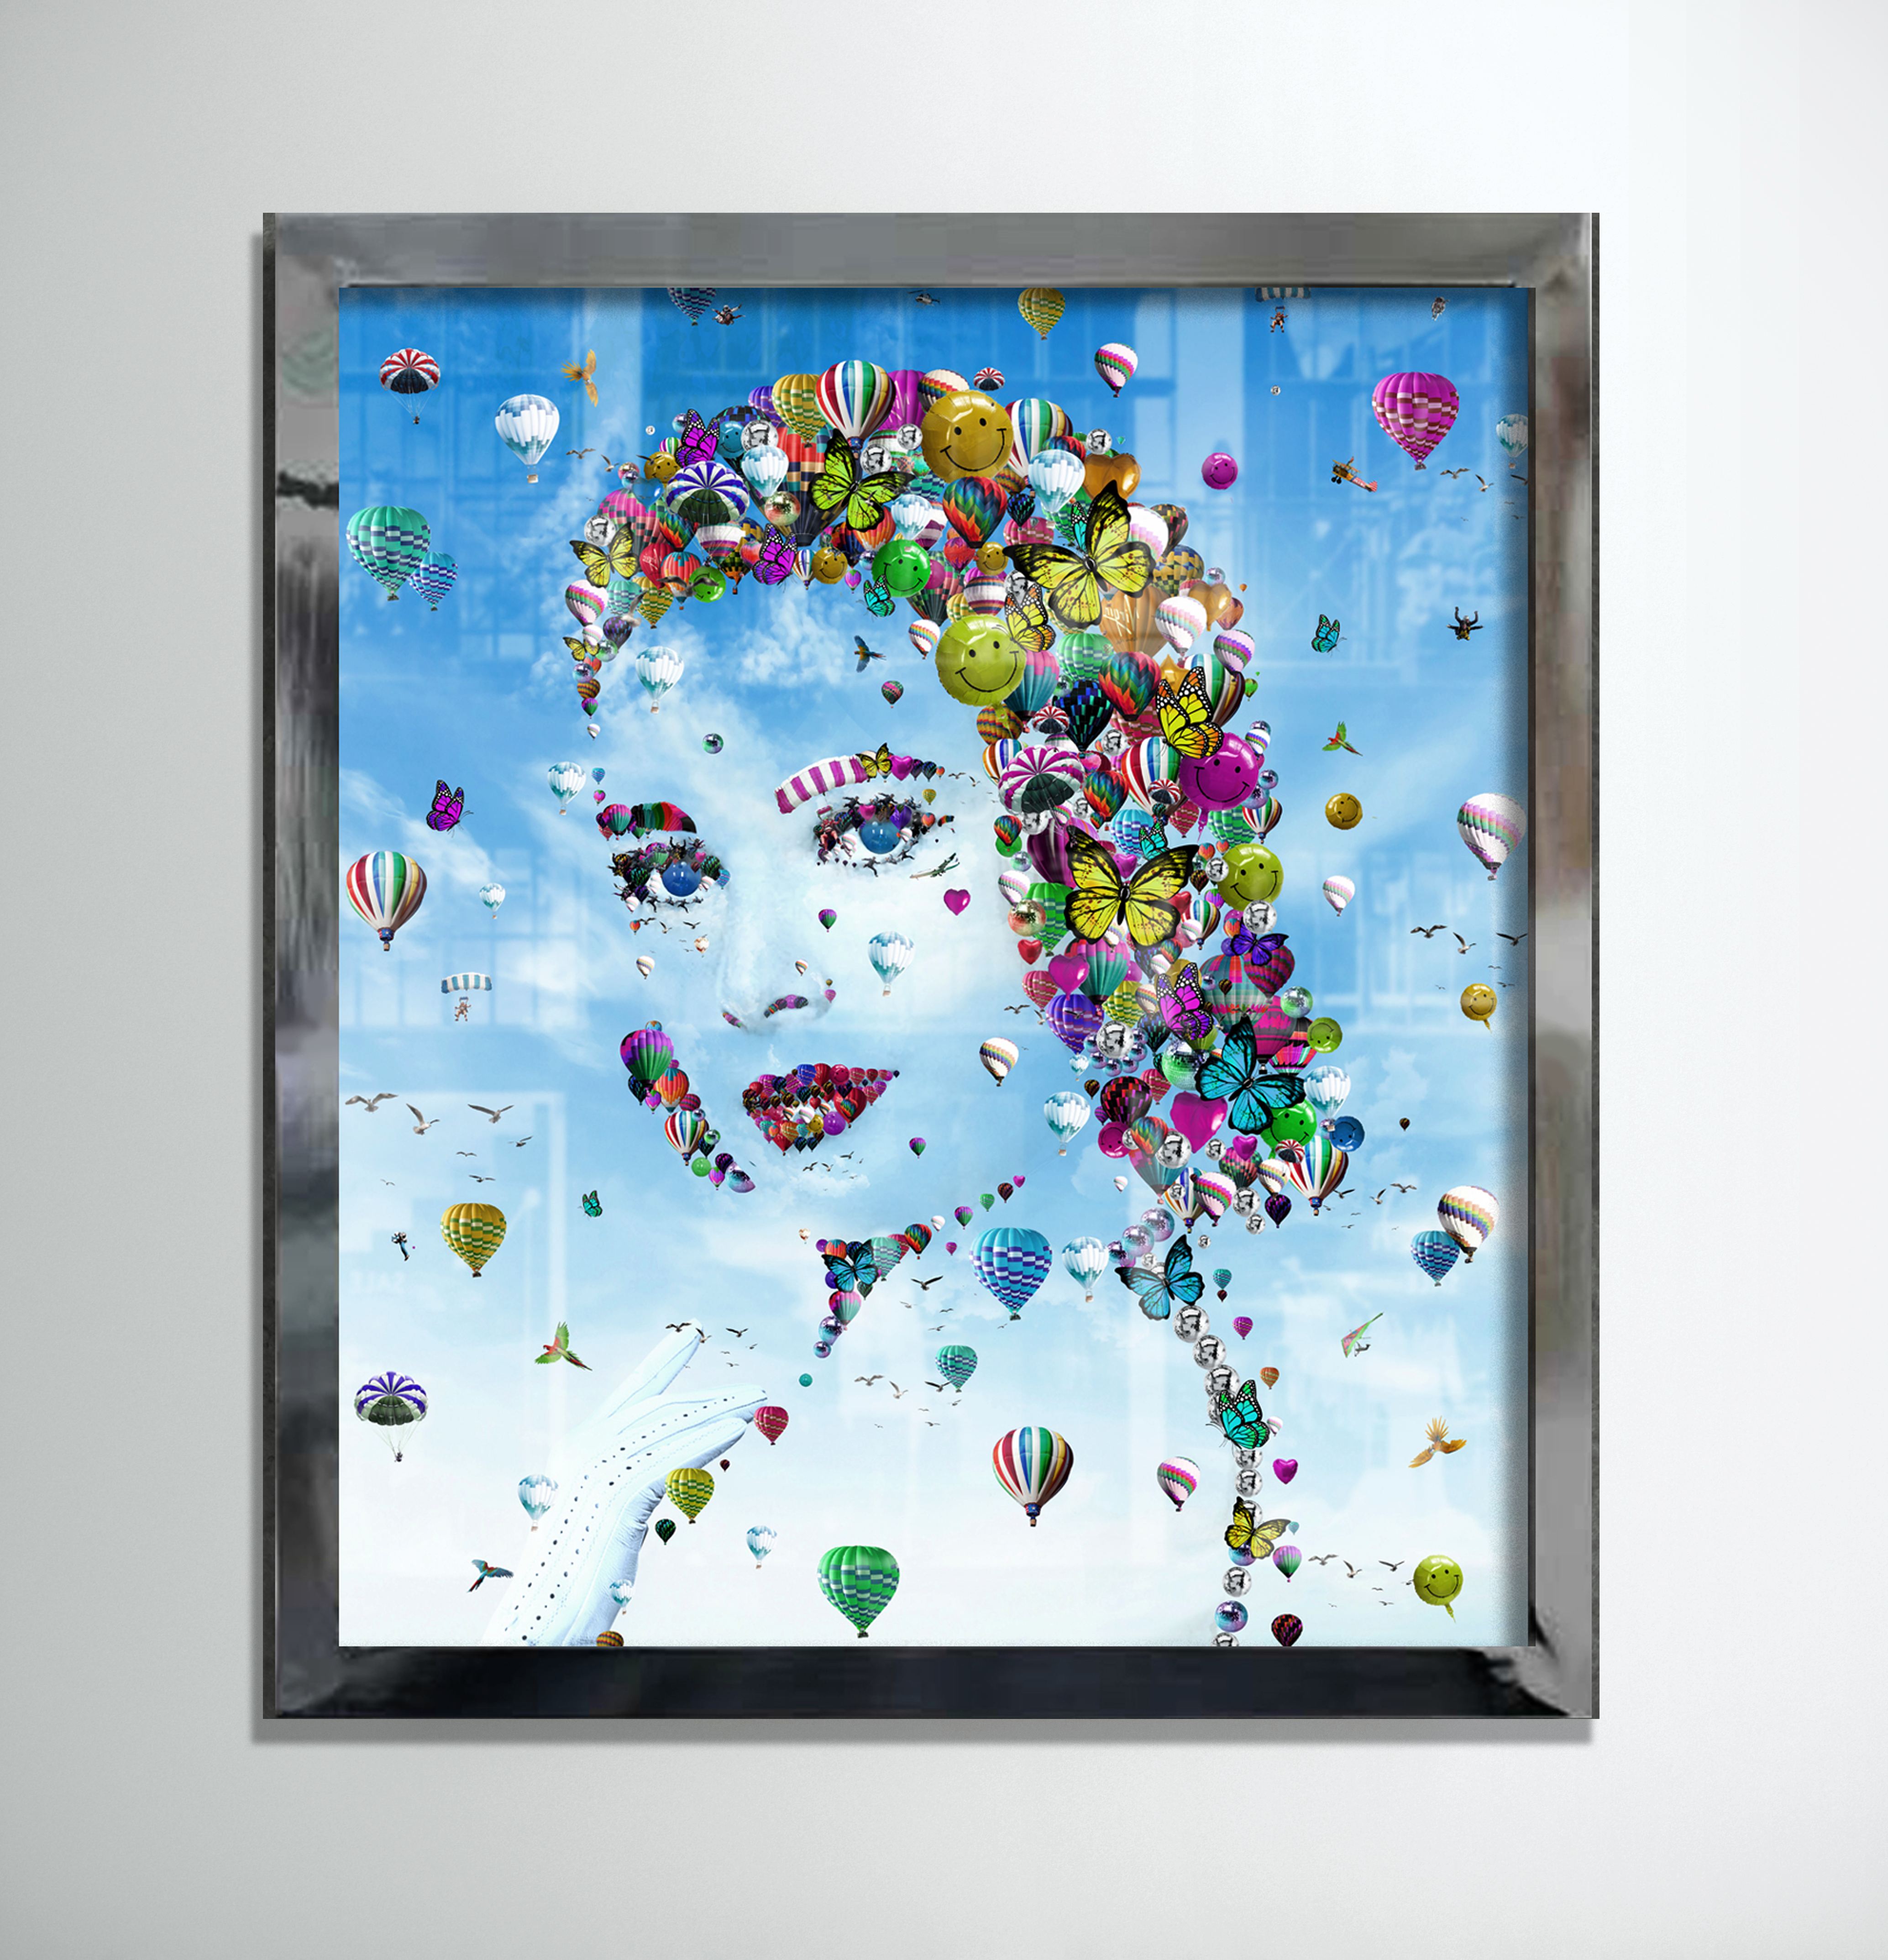 Grace Kelly Balloons by Iain Alexander | Limited Ediiton